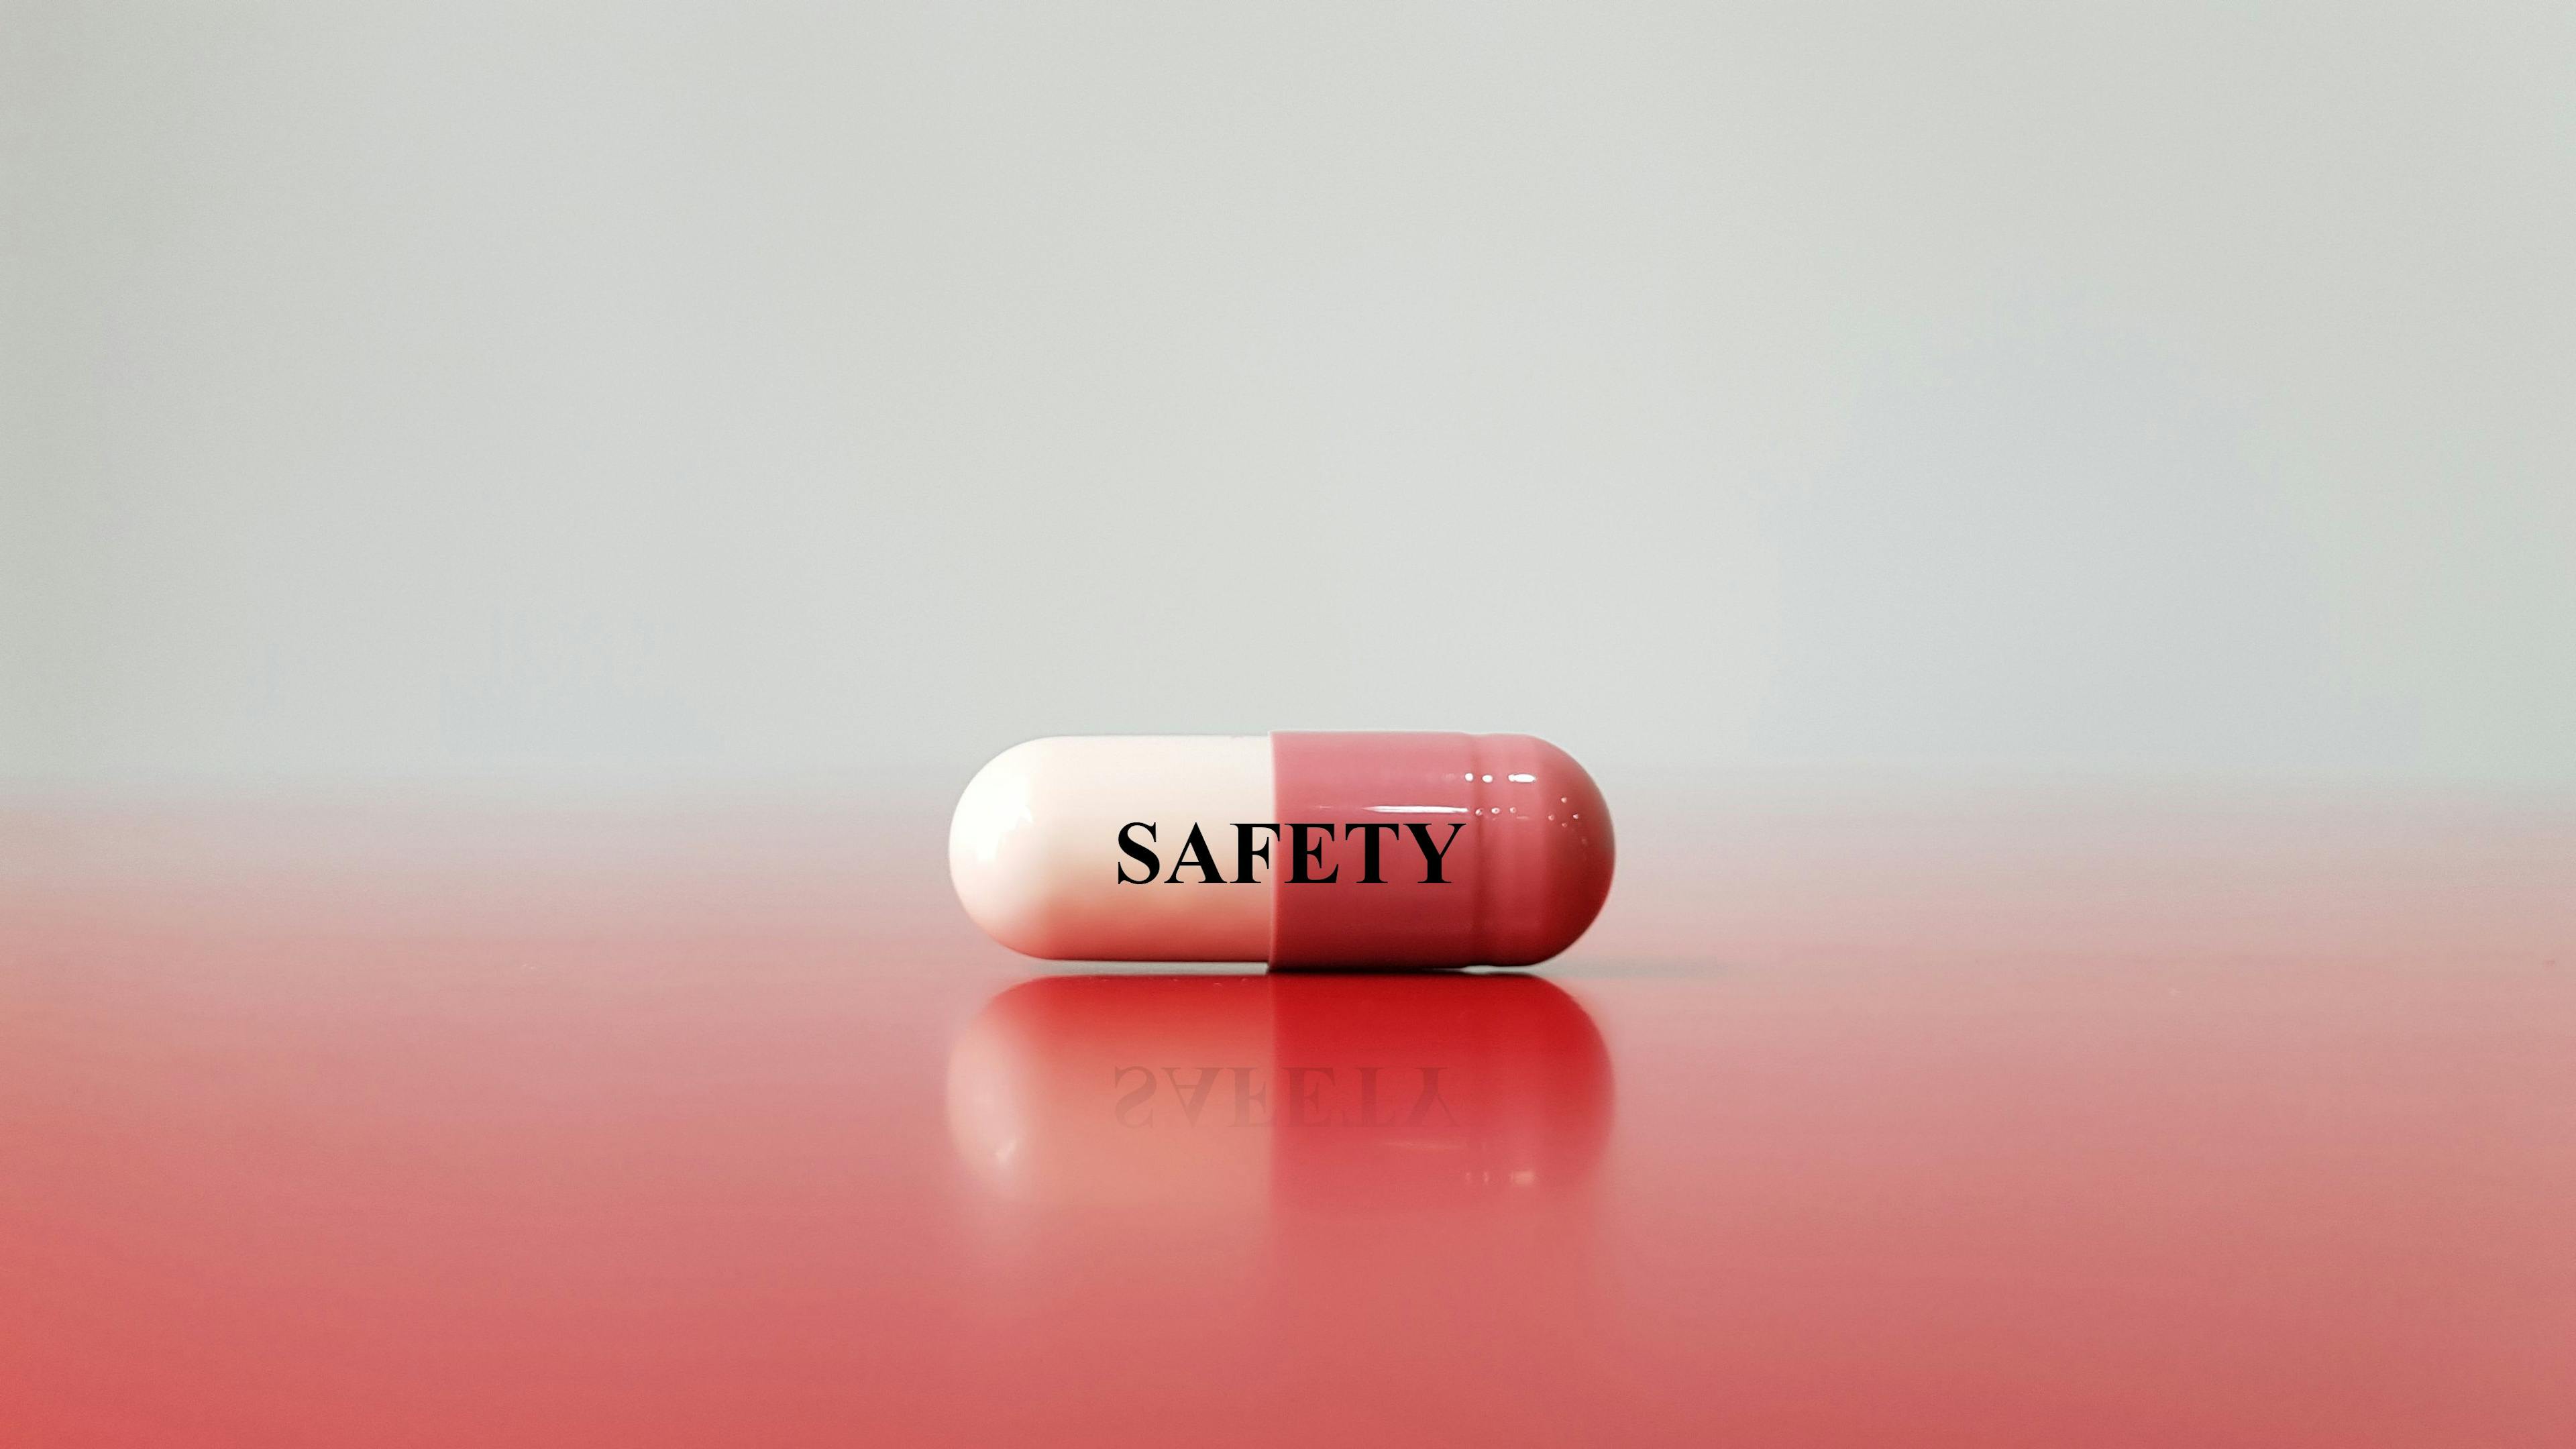 Medication safety | Image credit: Joel bubble ben - stock.adobe.com